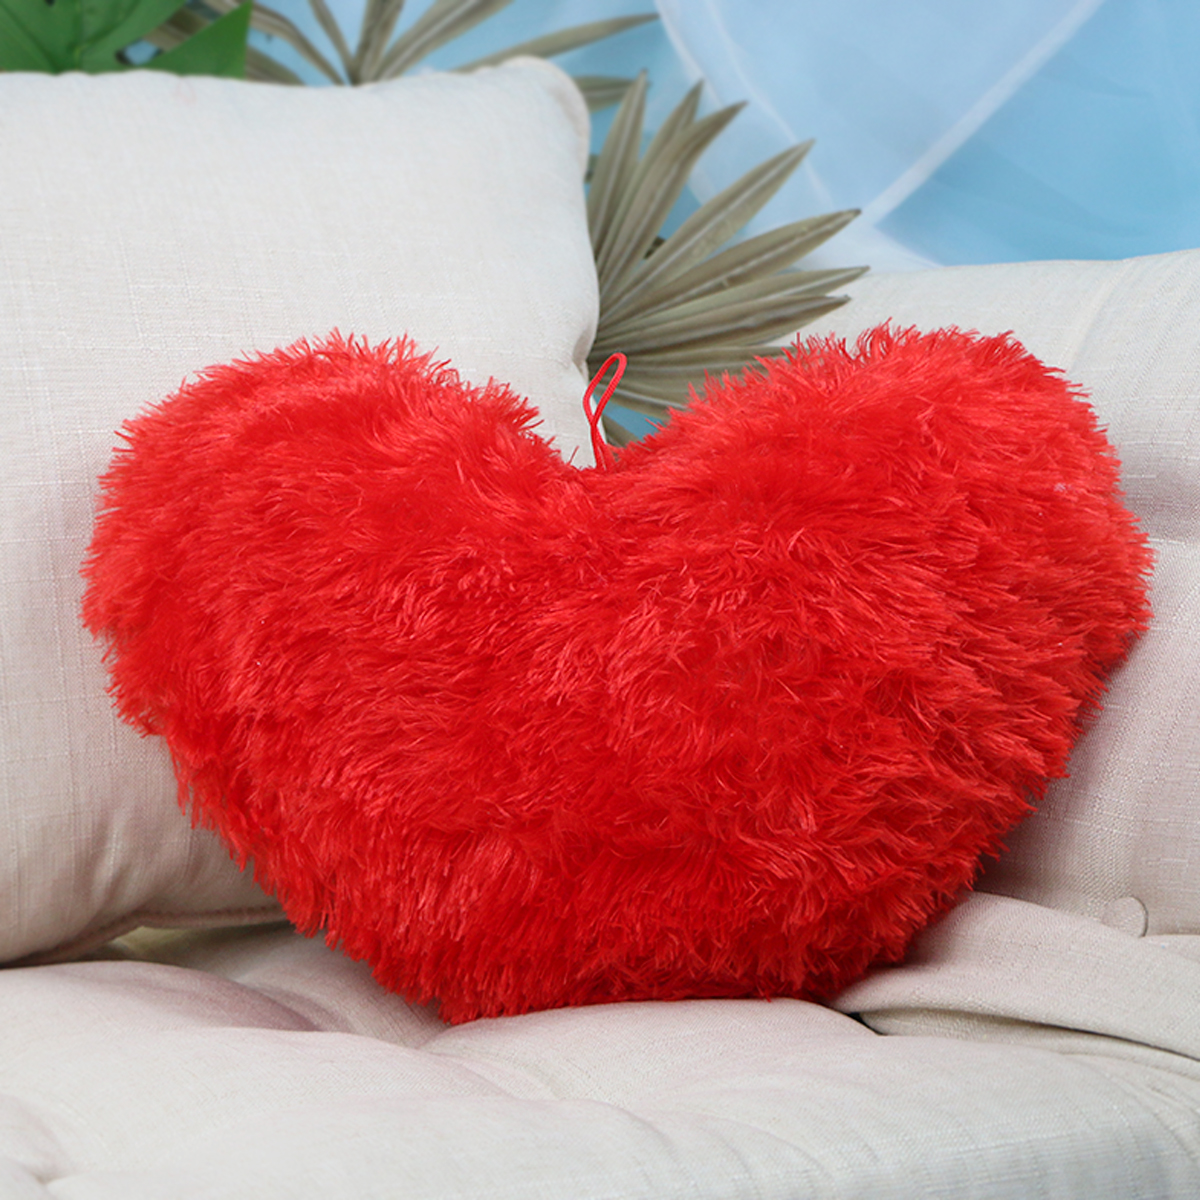 Подушка сердце Любовь красное, 30х40 см от plush.team